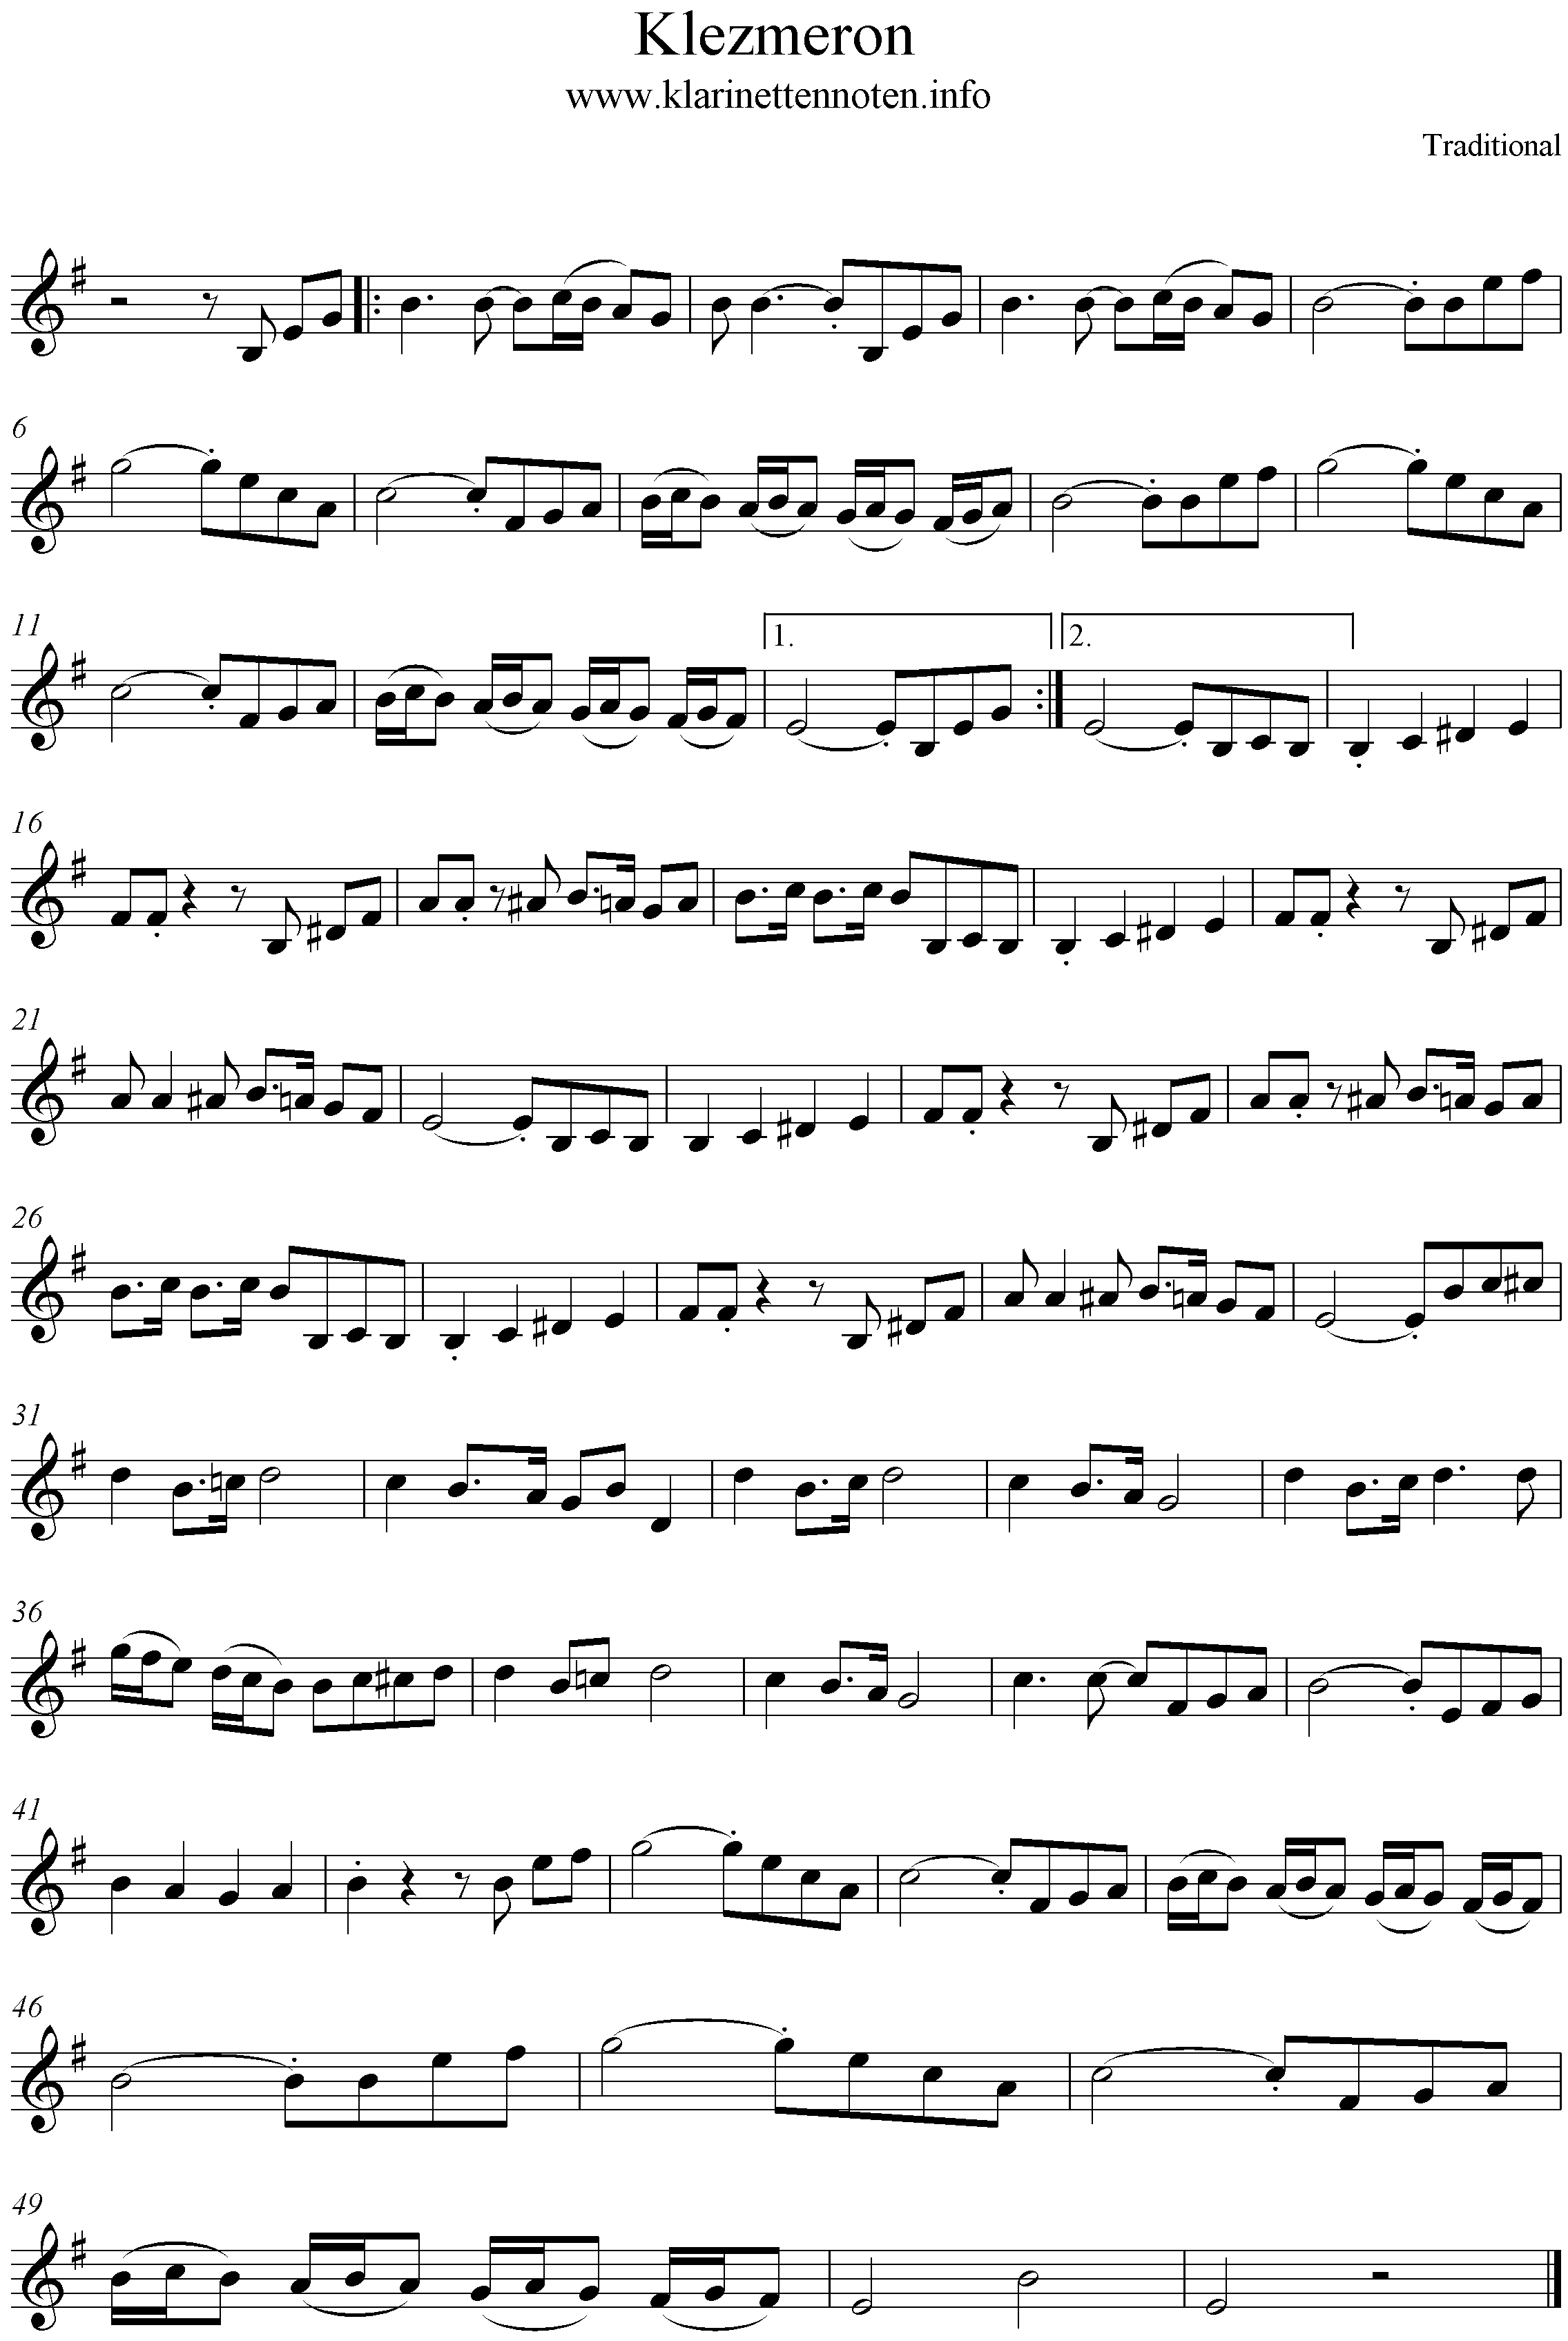 Klezmeron freesheet music Score Clarinet, Klarinette